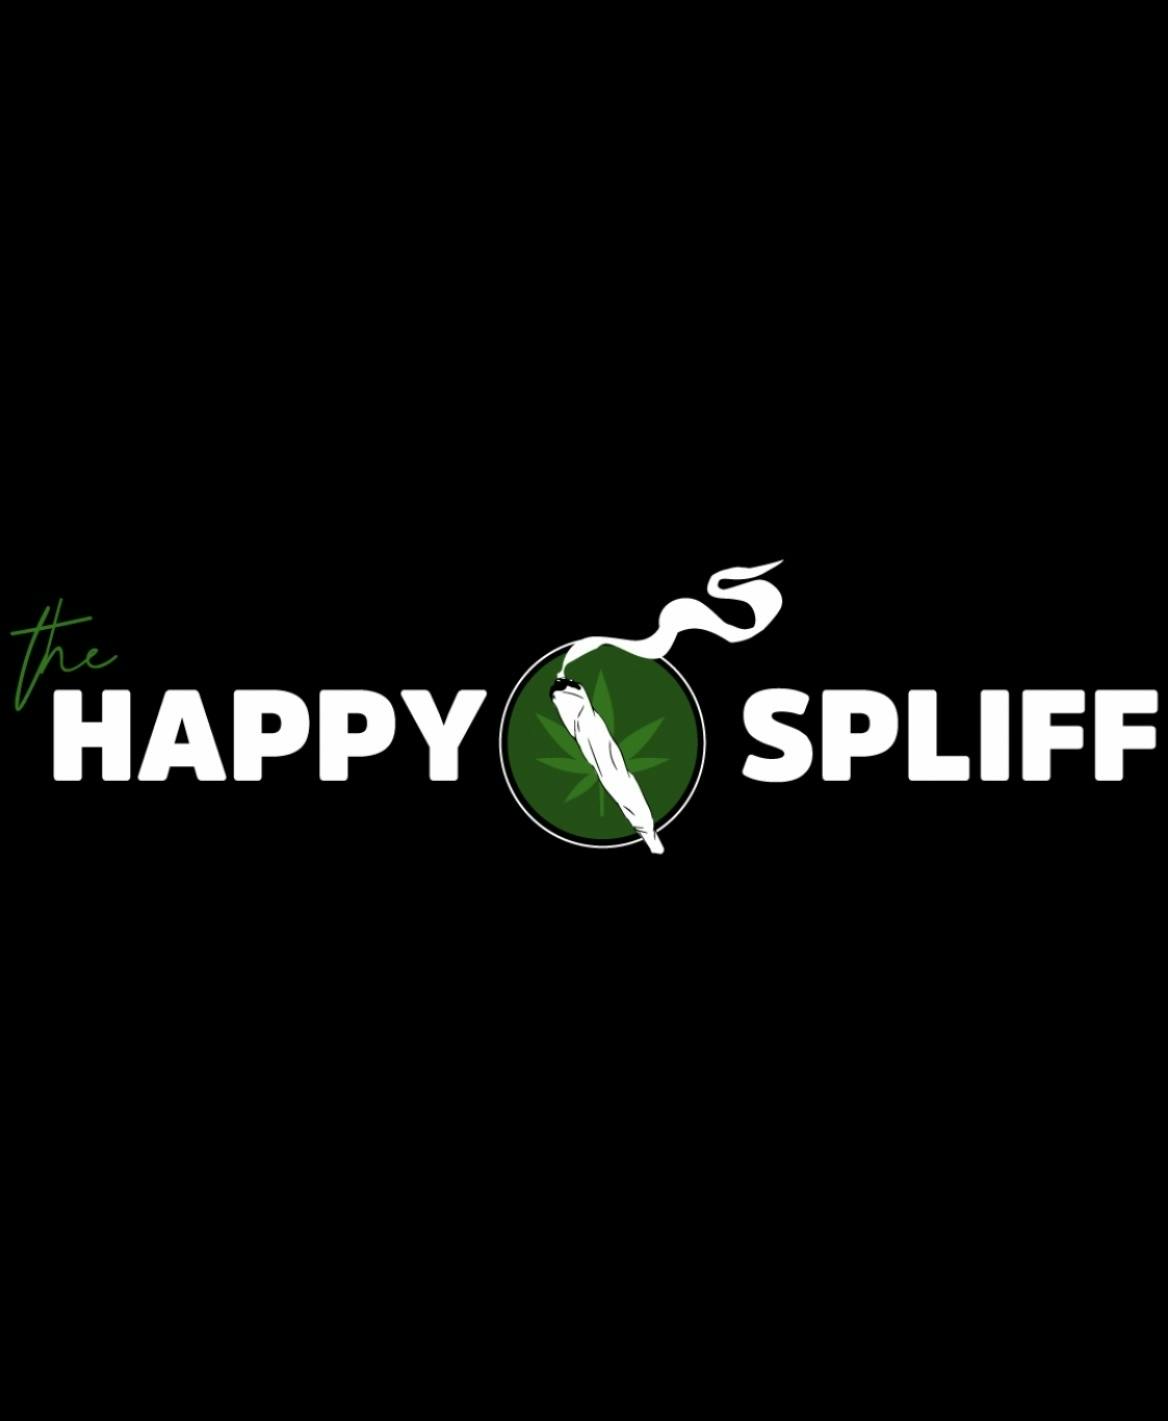 The Happy Spliff logo